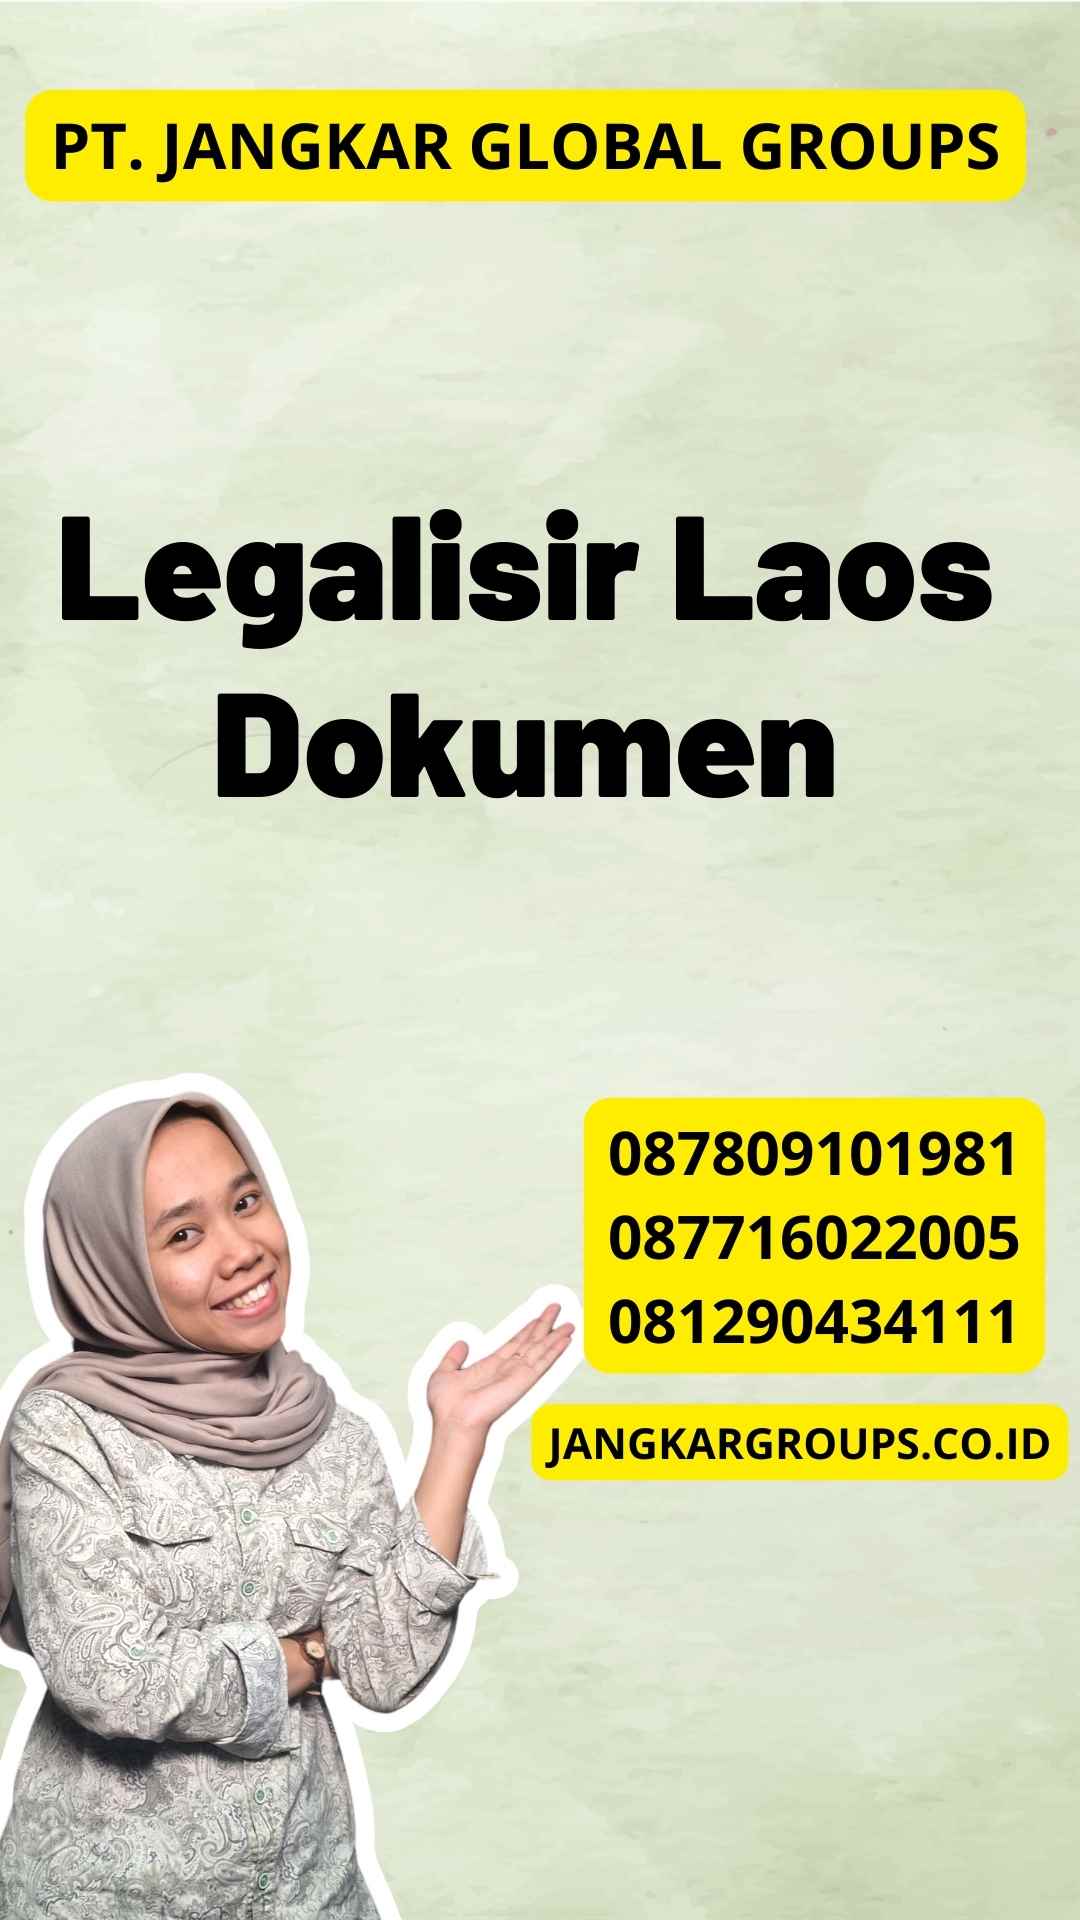 Legalisir Laos Dokumen